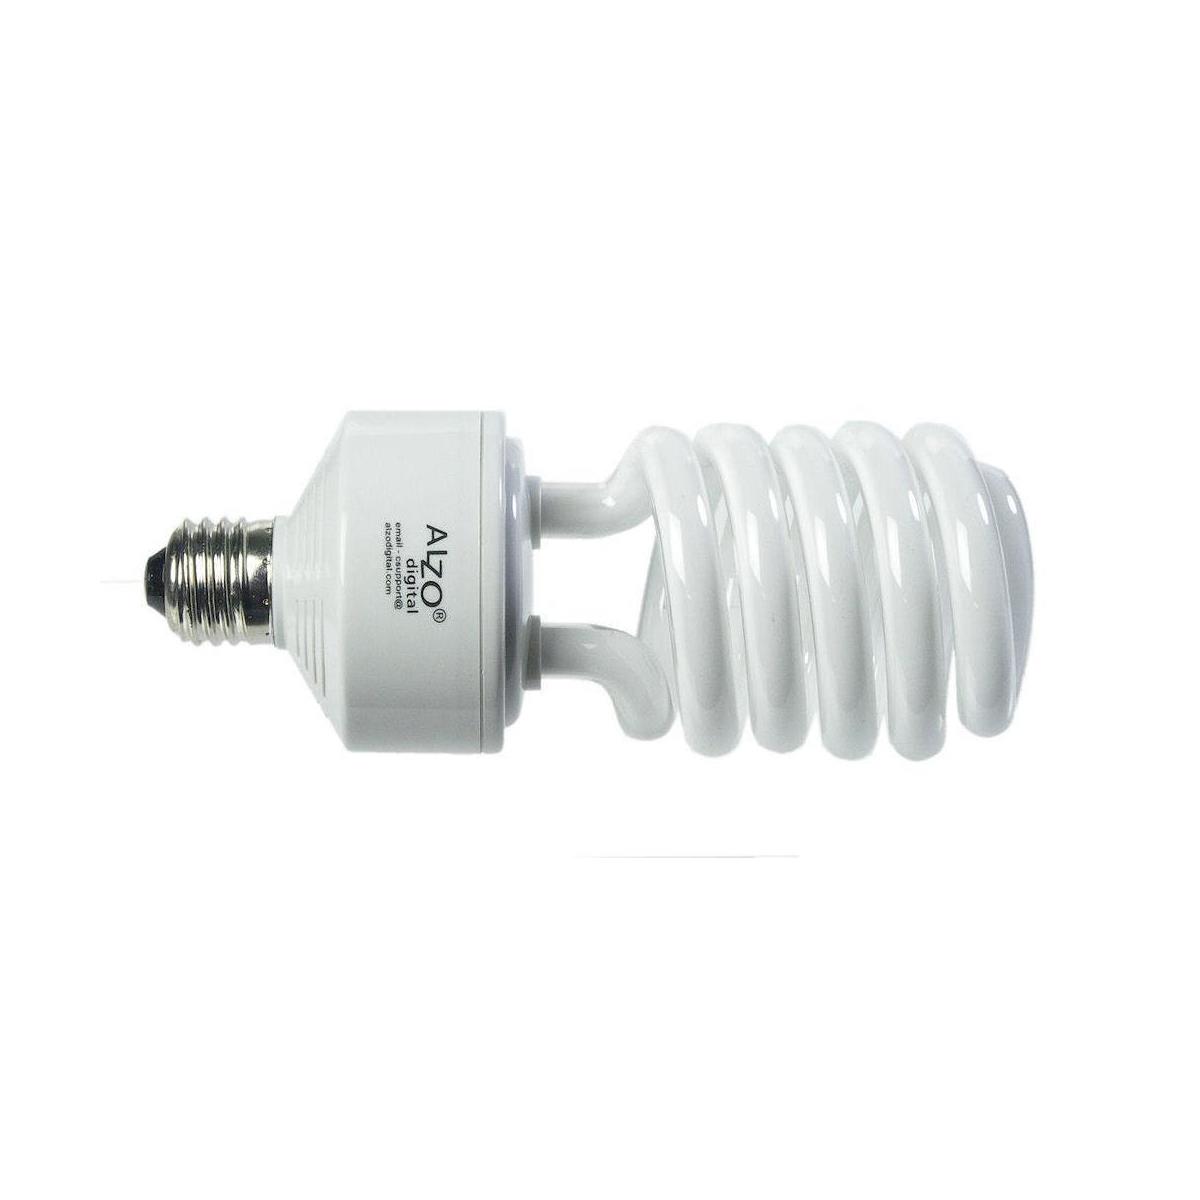 Alzo Digital 45W 220V CFL Video-Lux Photo Light Bulb, 5600K, 2800 Lumens -  1146-220-56